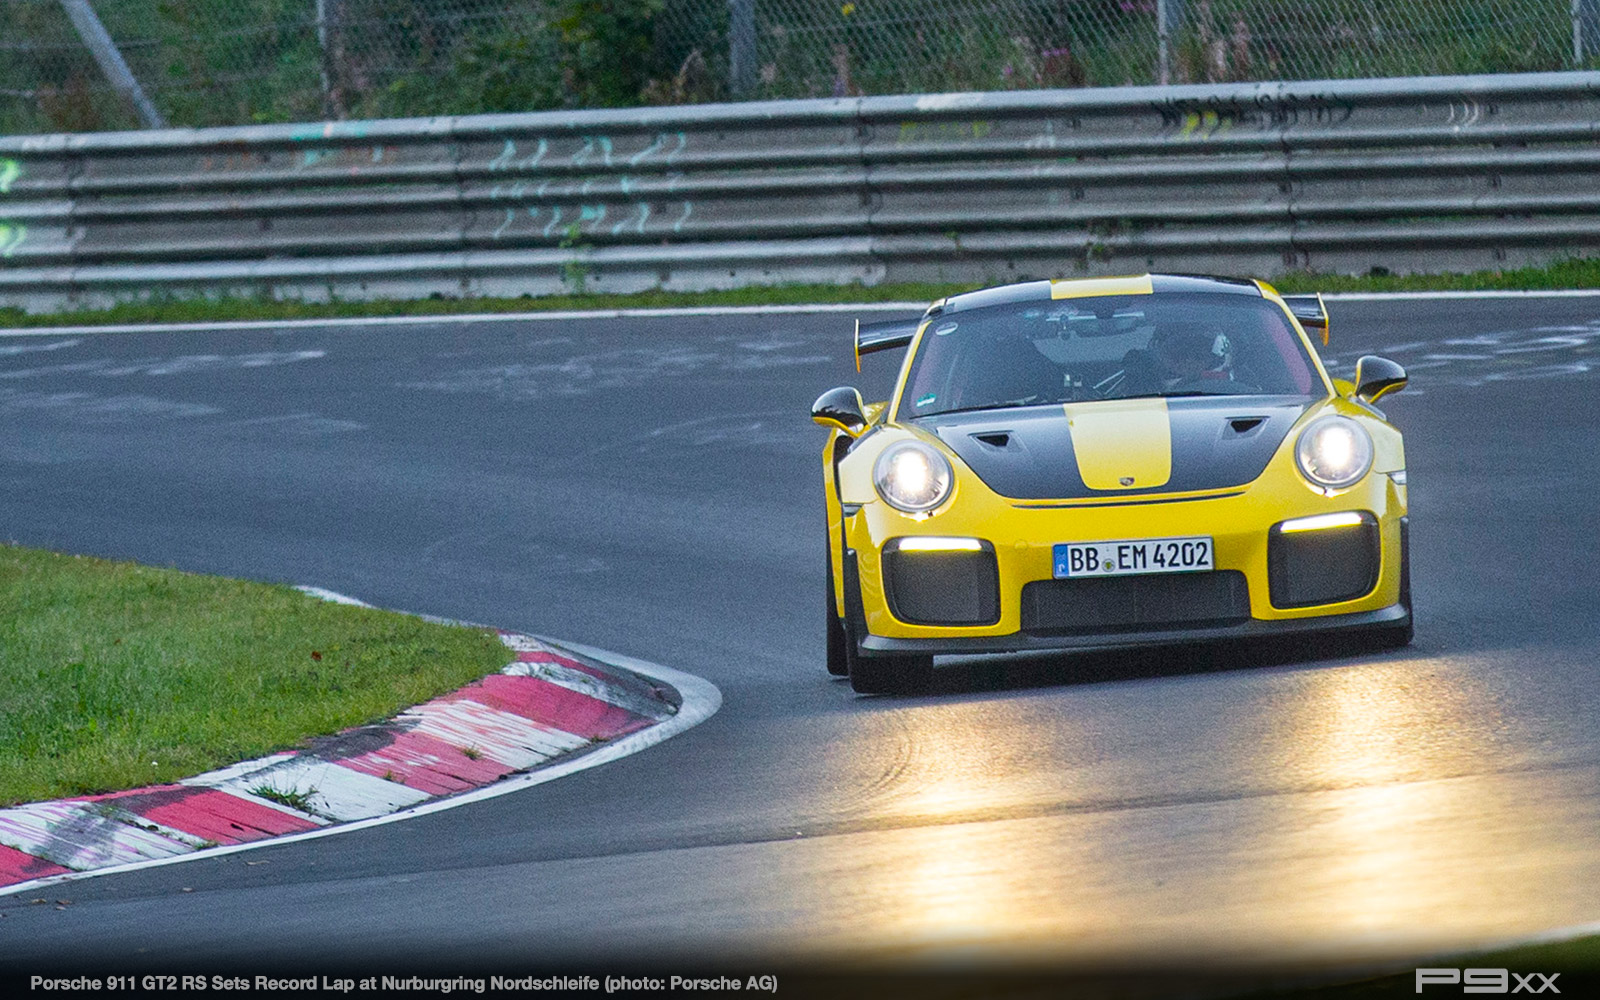 Porsche-911-GT2-RS-Nurburgring-record-lap-519